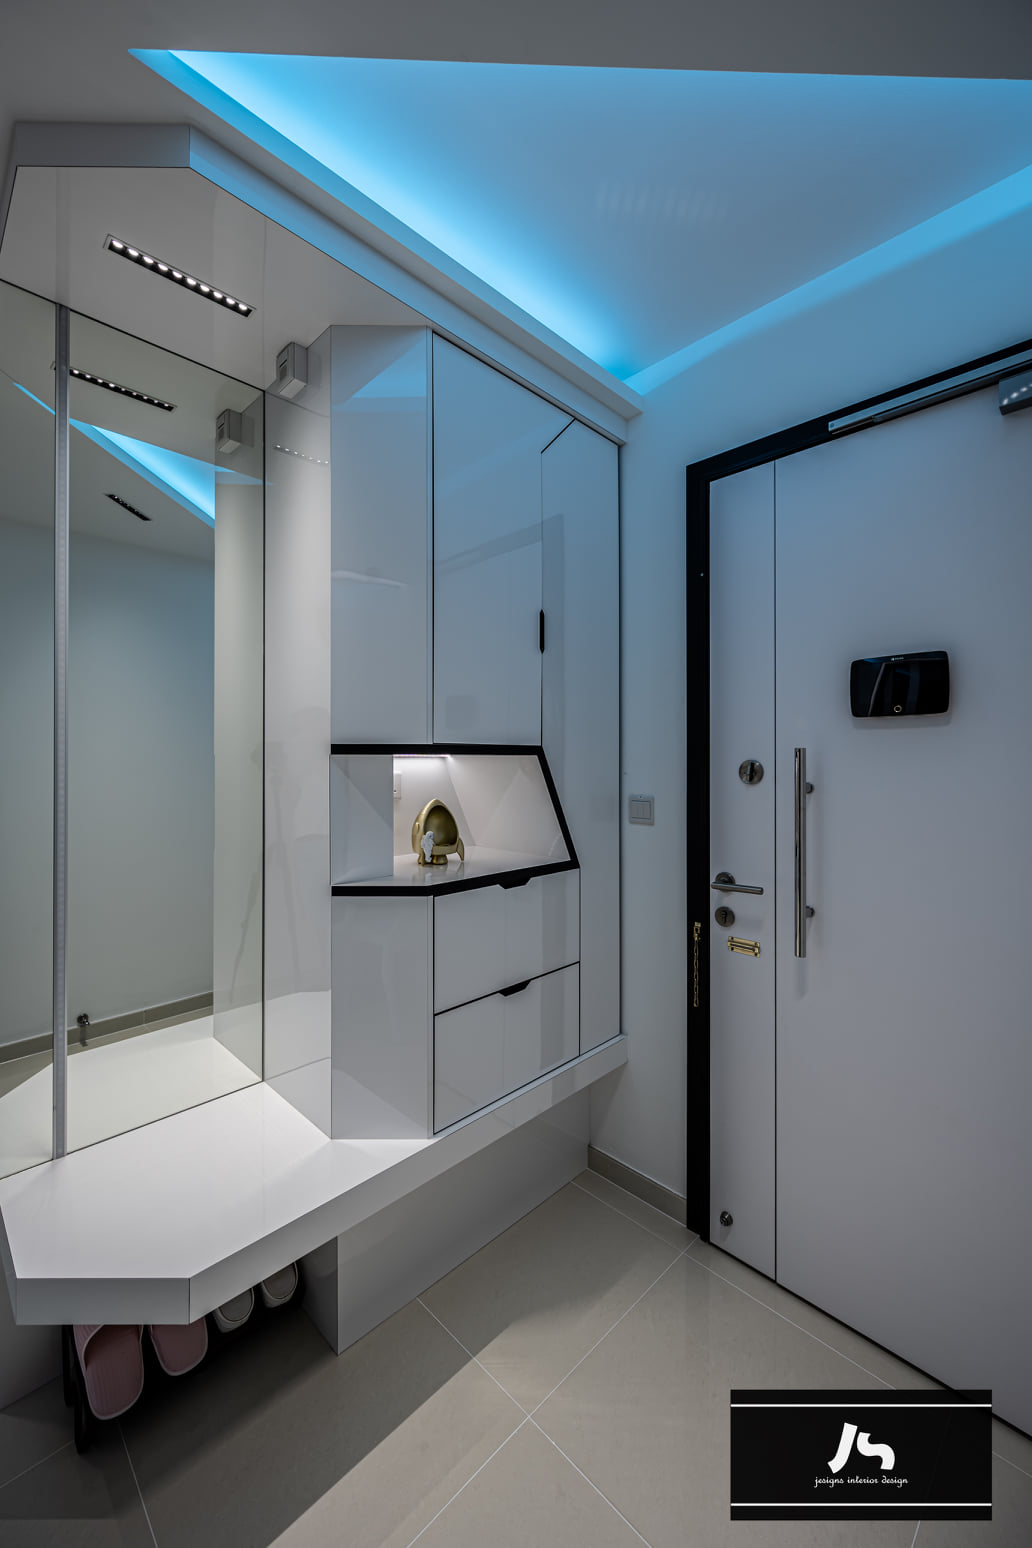 4 Tron blue futuristic bedroom theme | Interior Design Ideas